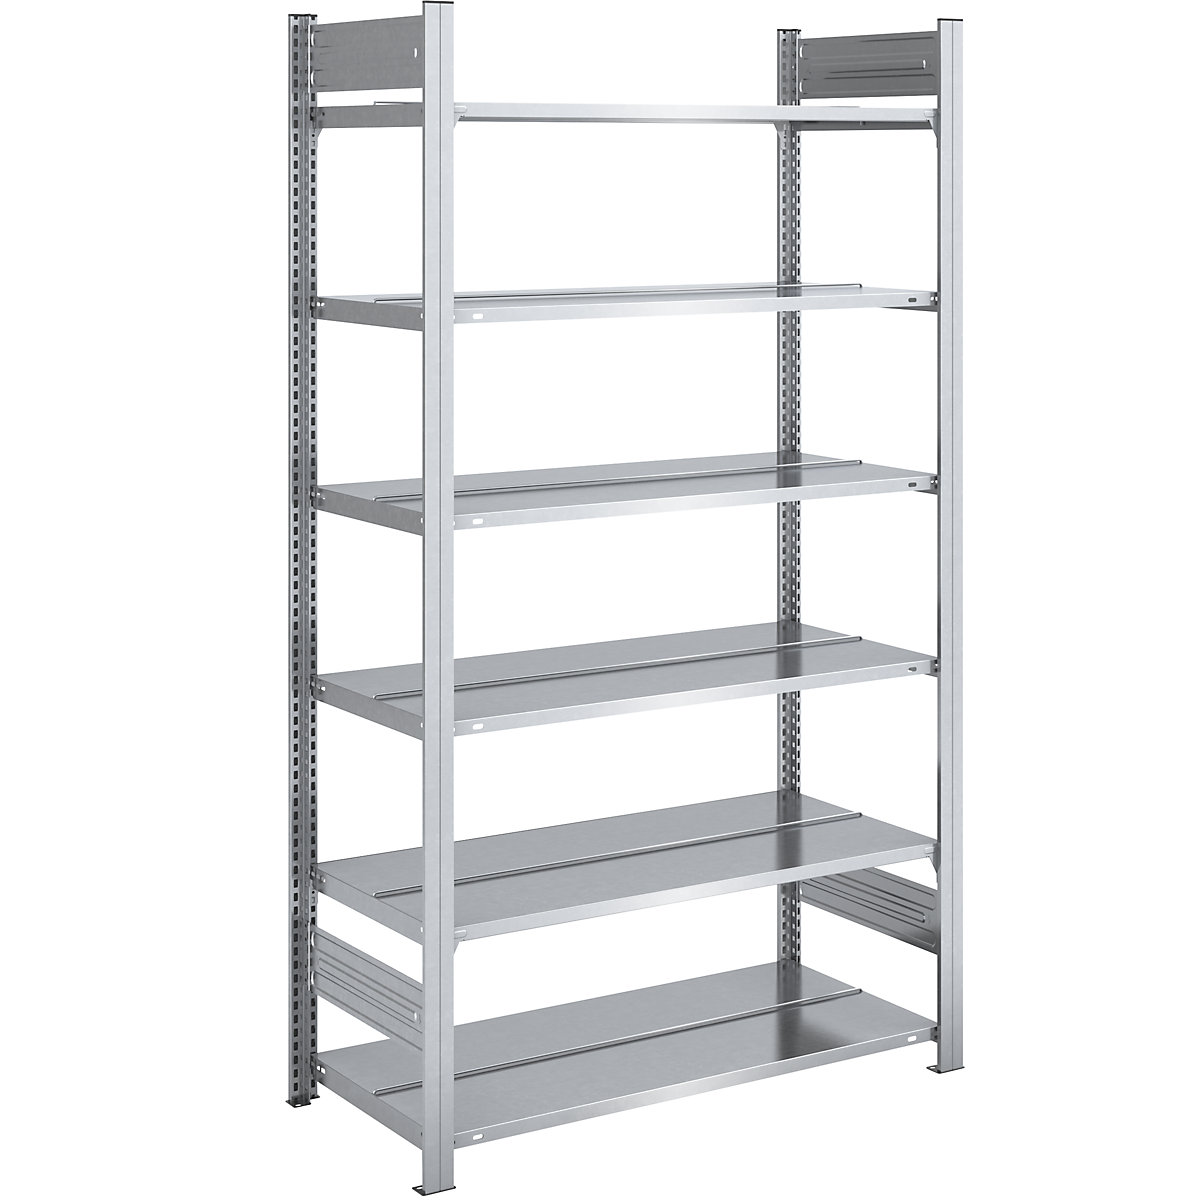 Boltless filing shelf unit, zinc plated – hofe, shelf height 2000 mm, double sided, standard shelf unit, WxD 1000 x 600 mm-5